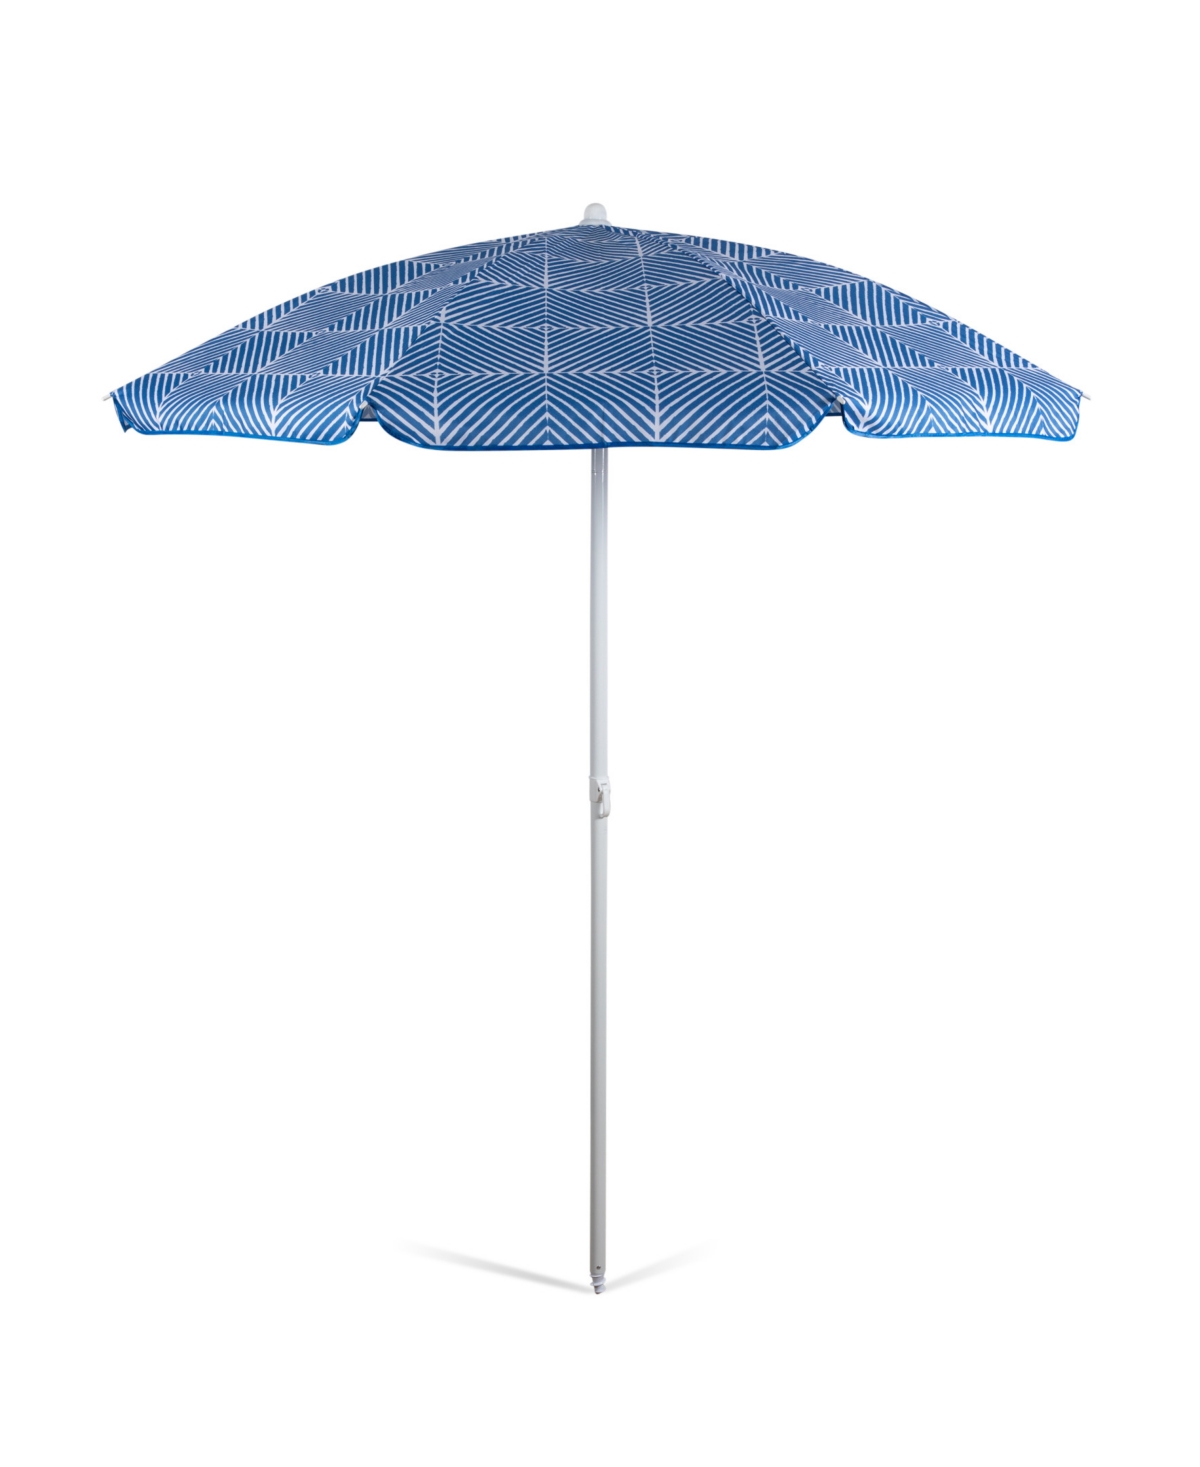 5.5' Portable Beach Umbrella - Phoenix Stripe